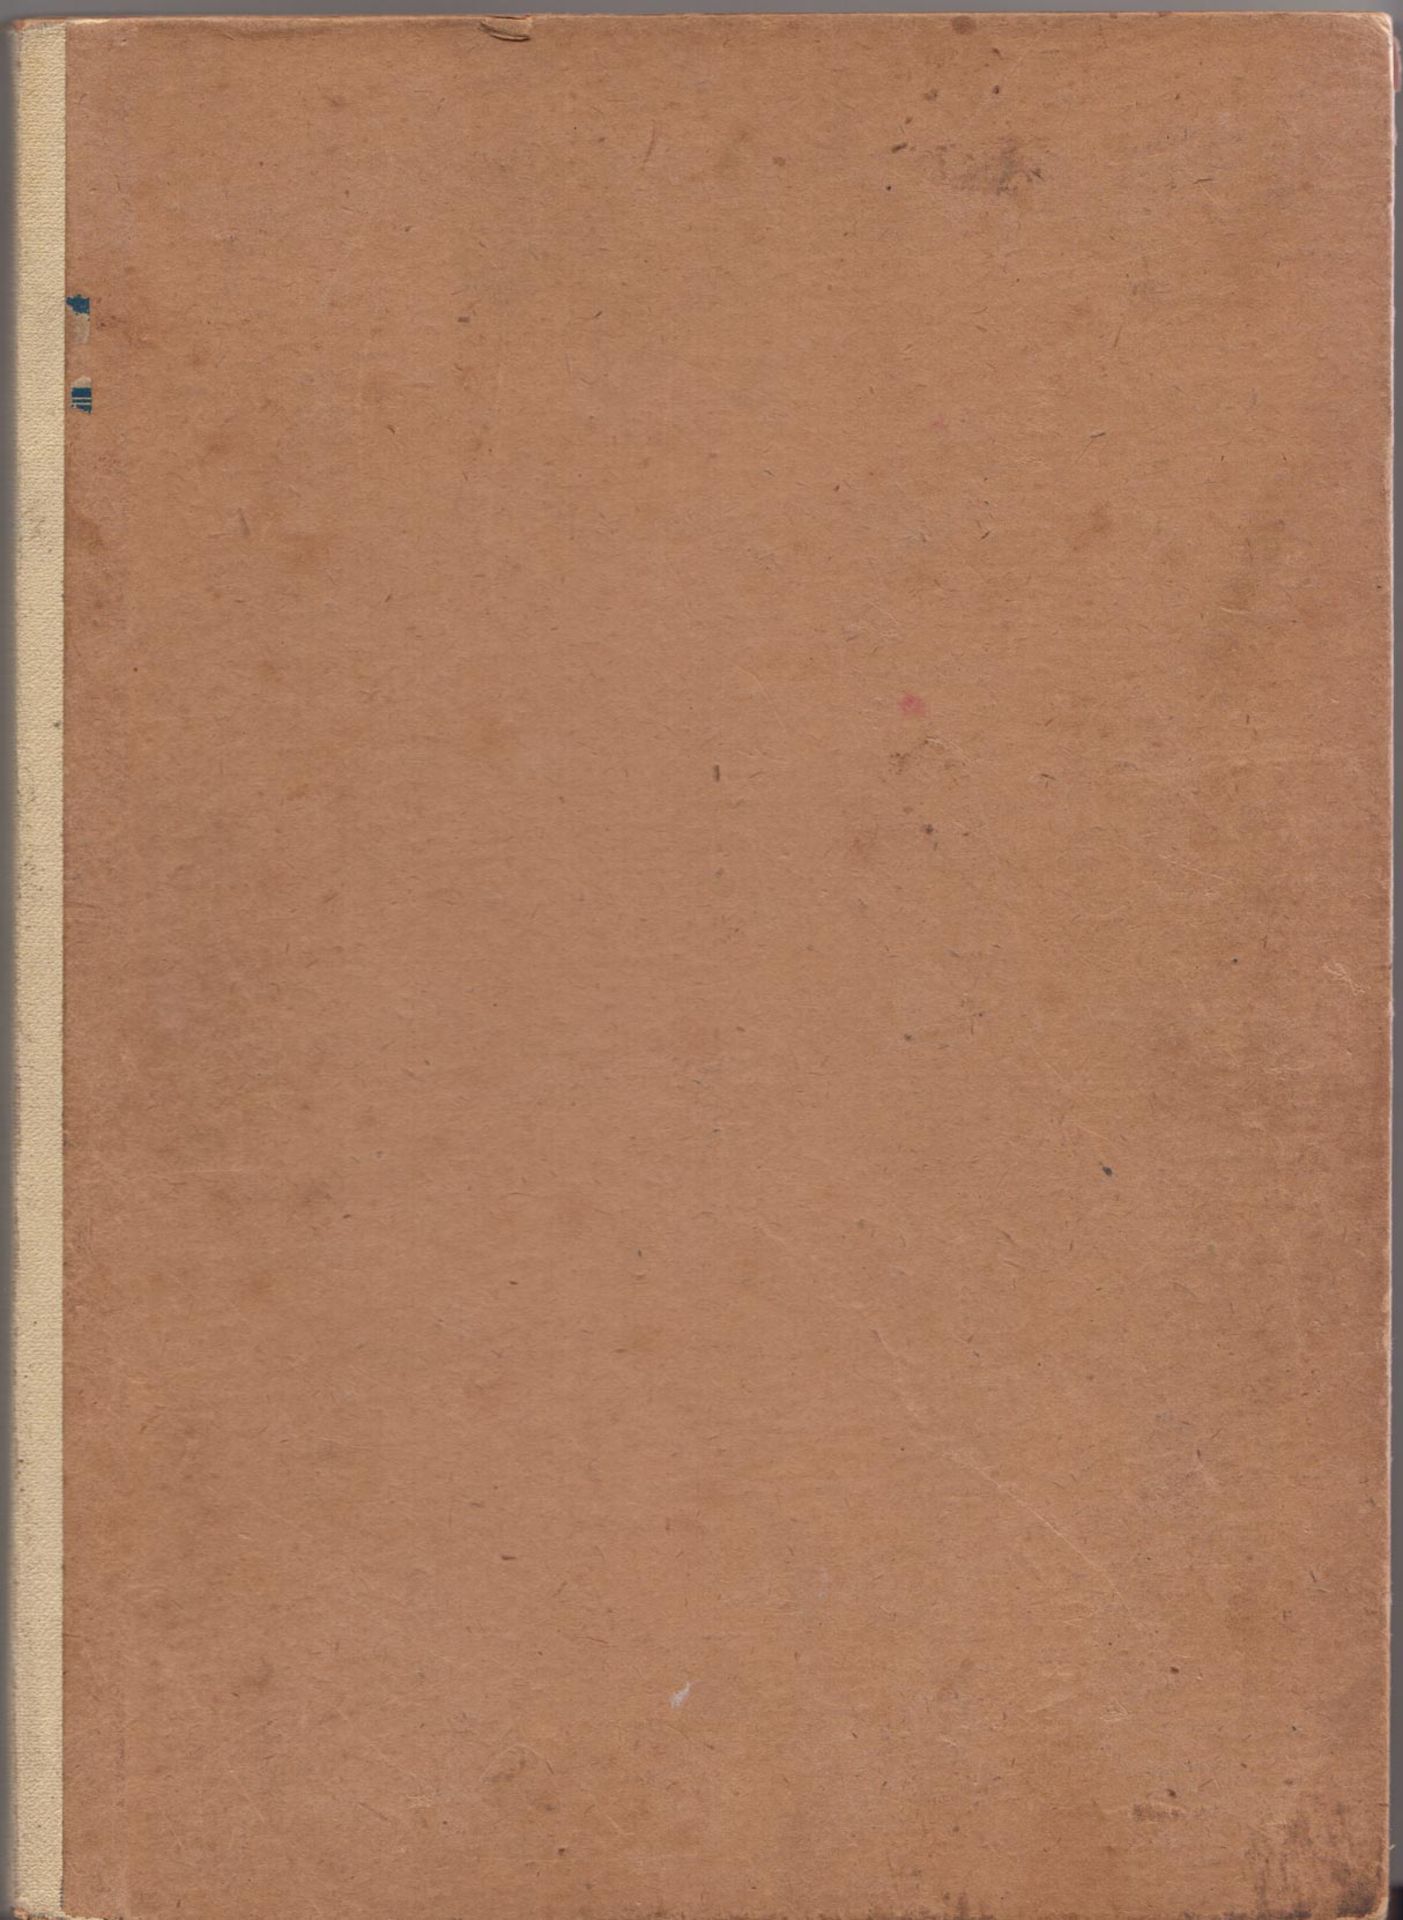 Reclams Universum Weltrundschau 1917 Kriegsausgabe - Bild 2 aus 4